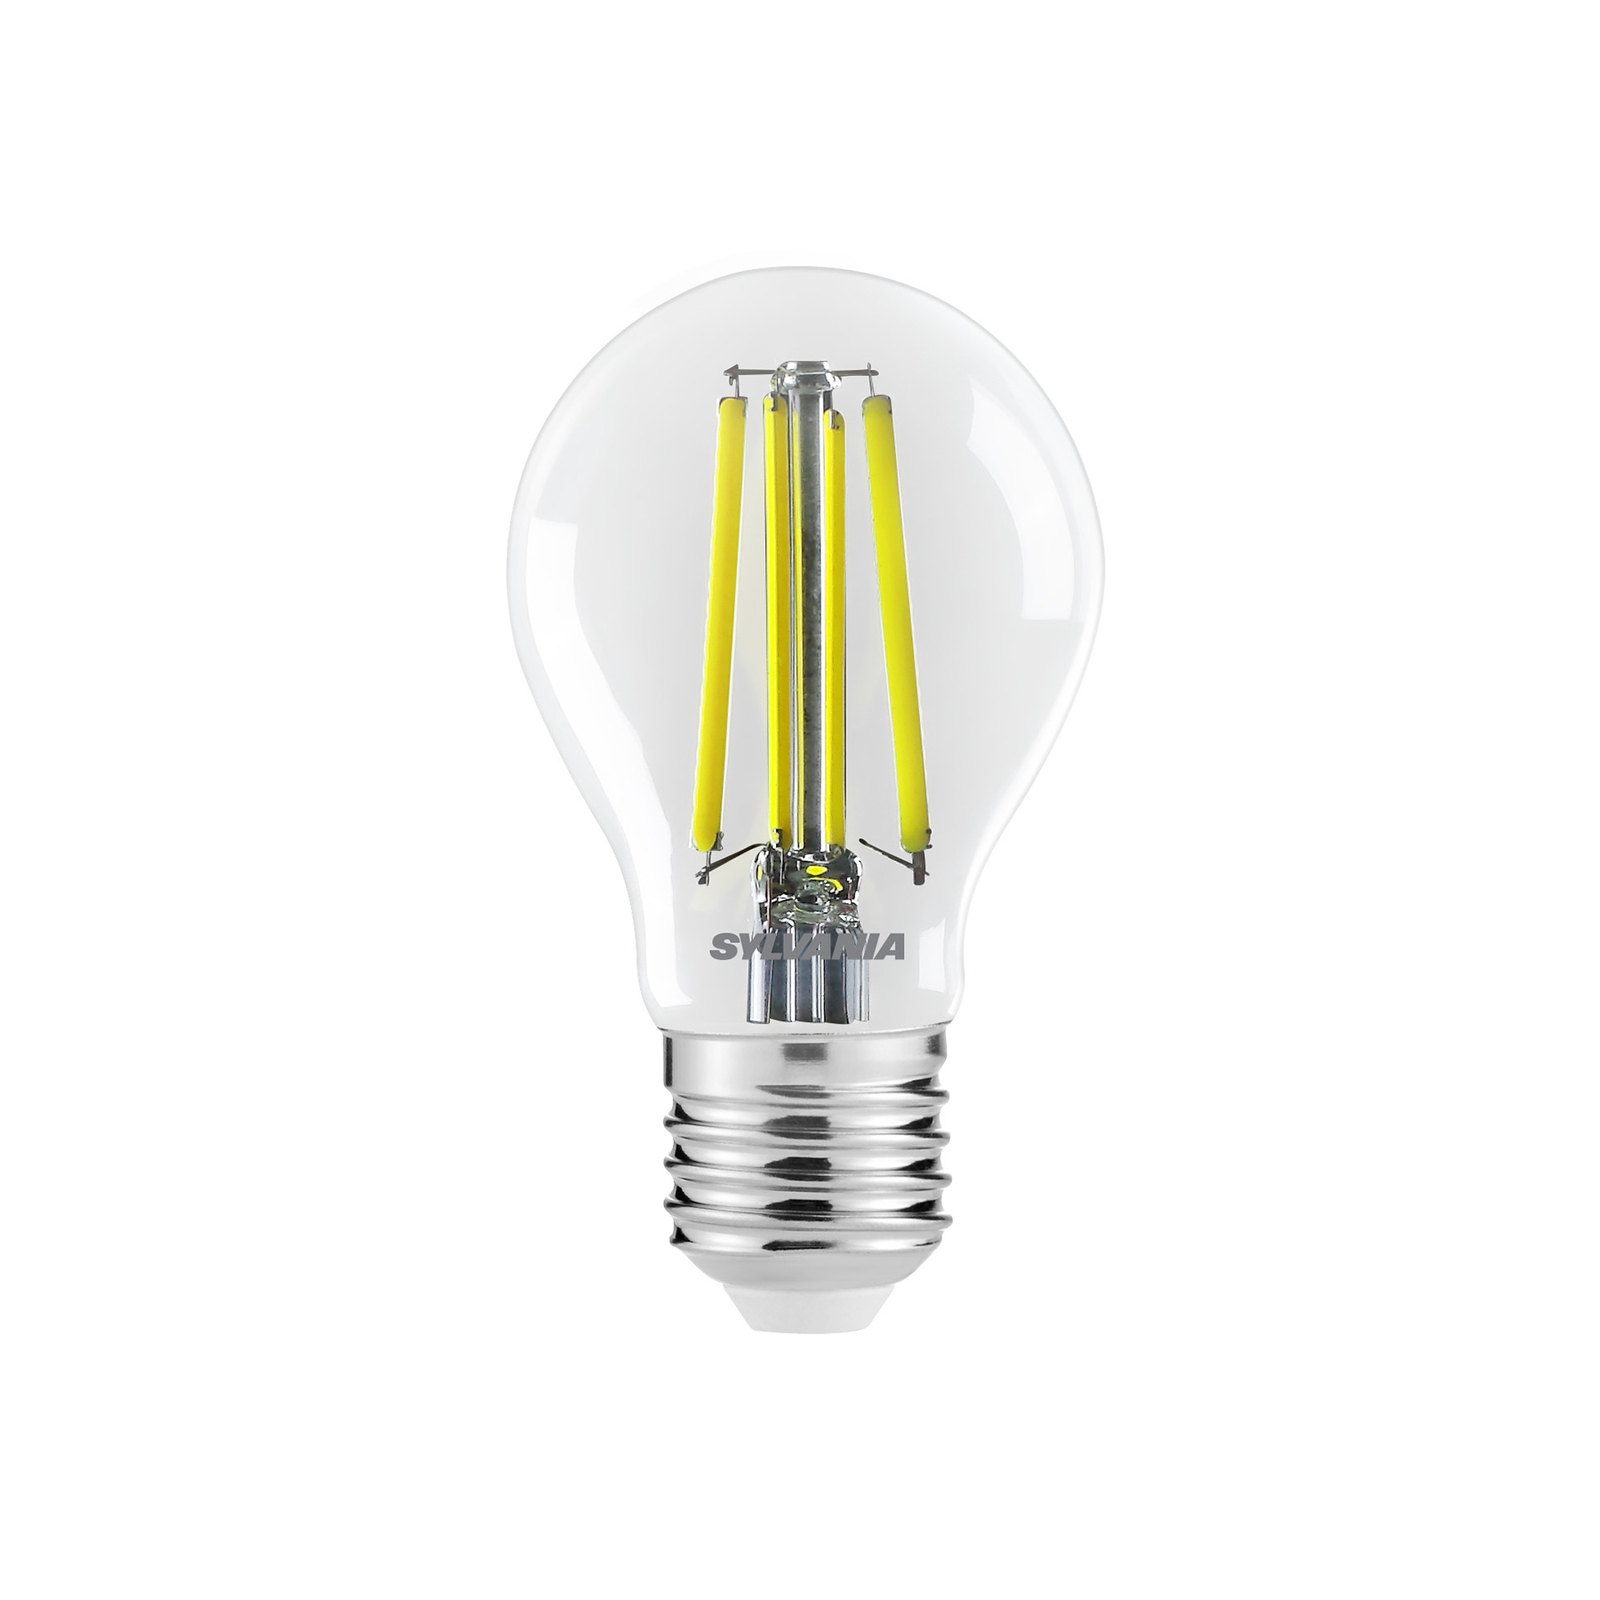 Sylvania E27 filament LED bulb 4W 4,000K 840lm